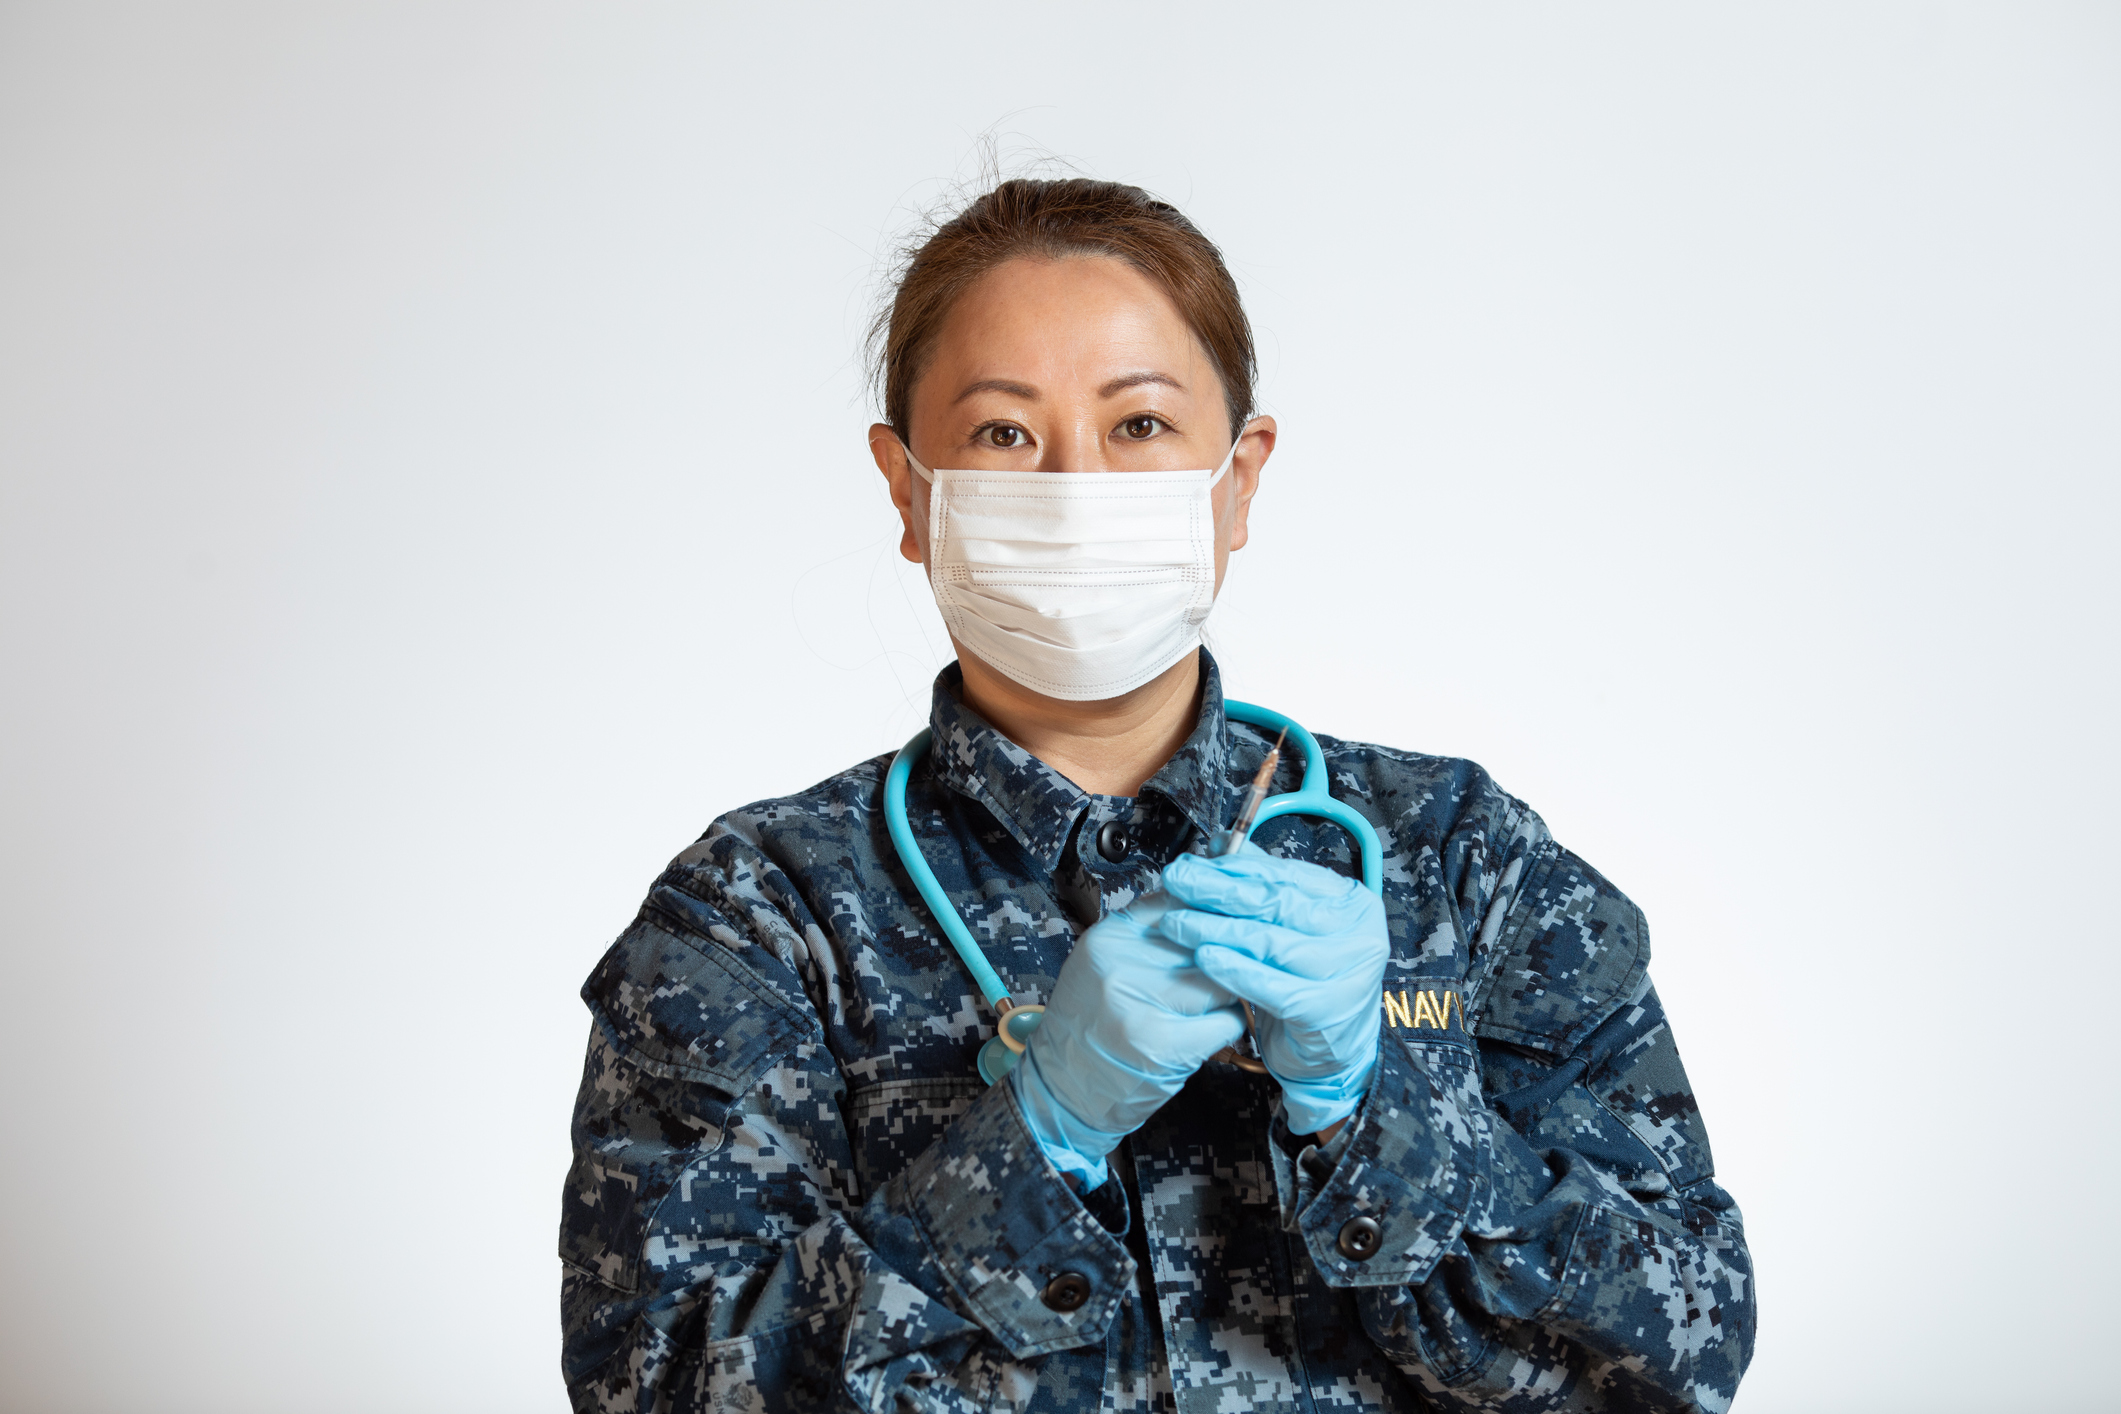 Military Nurse